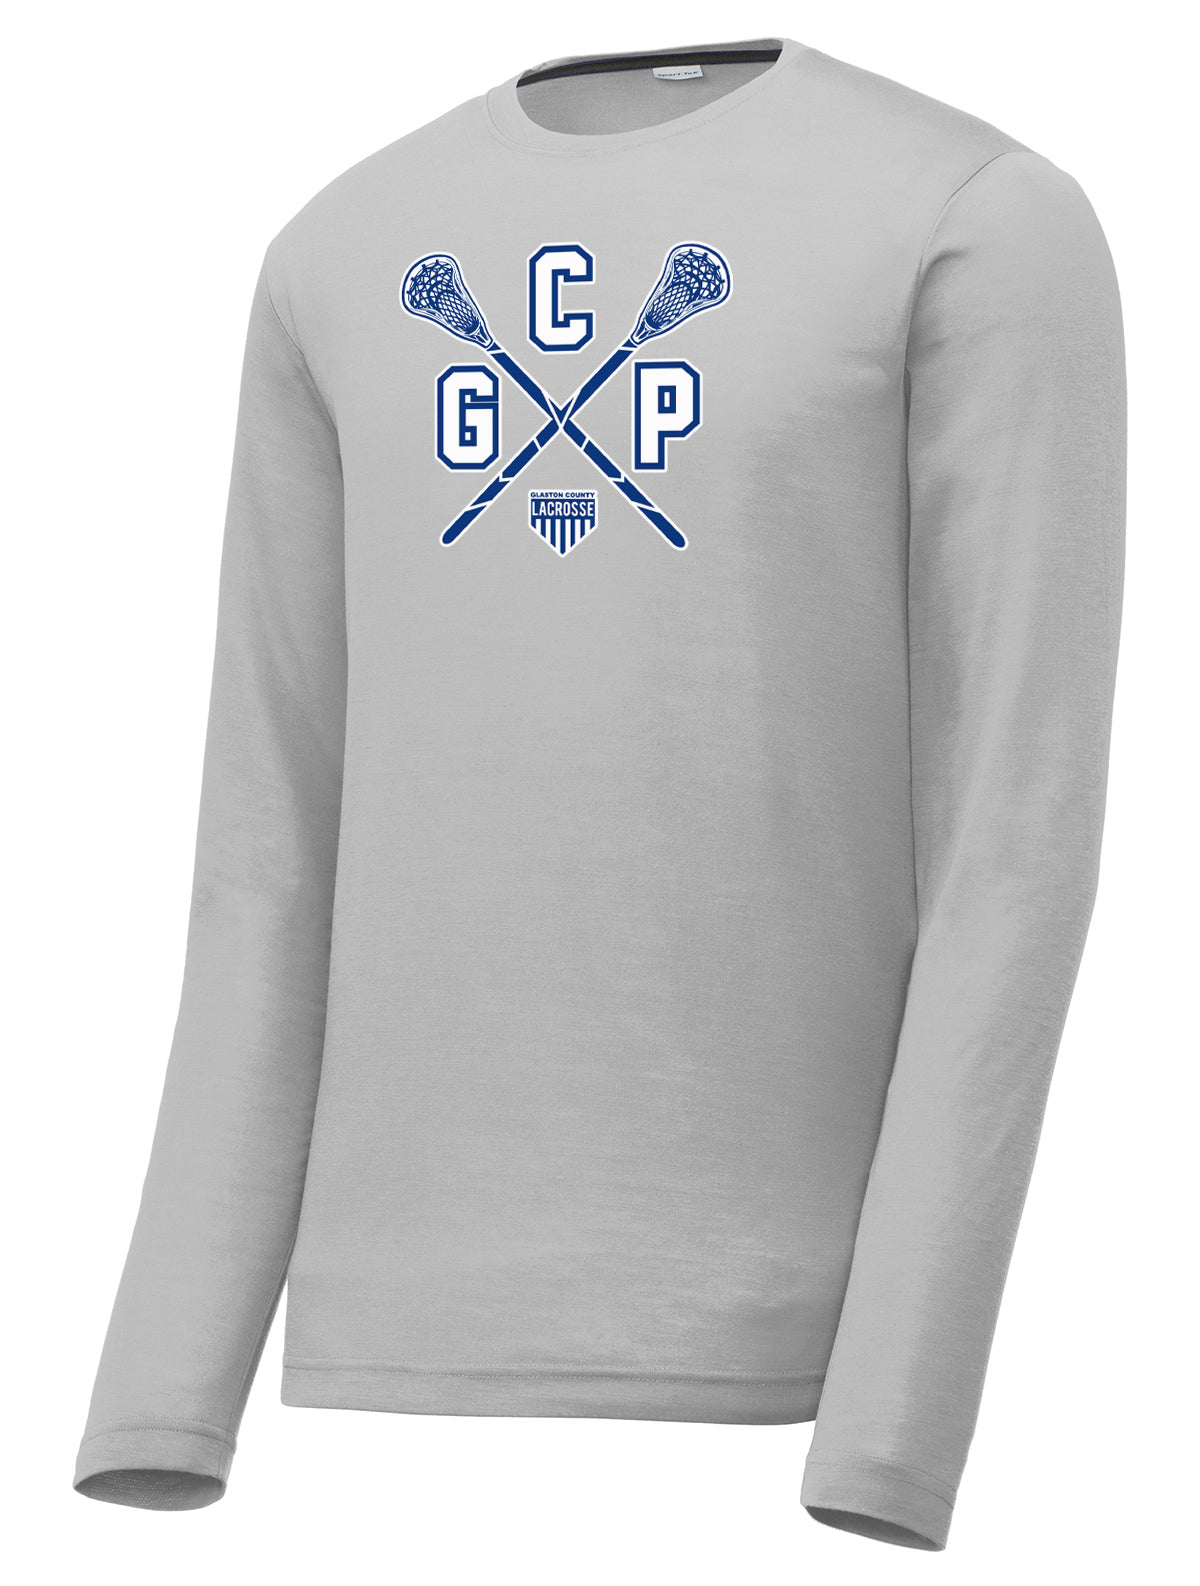 GCP Lacrosse Silver Long Sleeve CottonTouch Performance Shirt